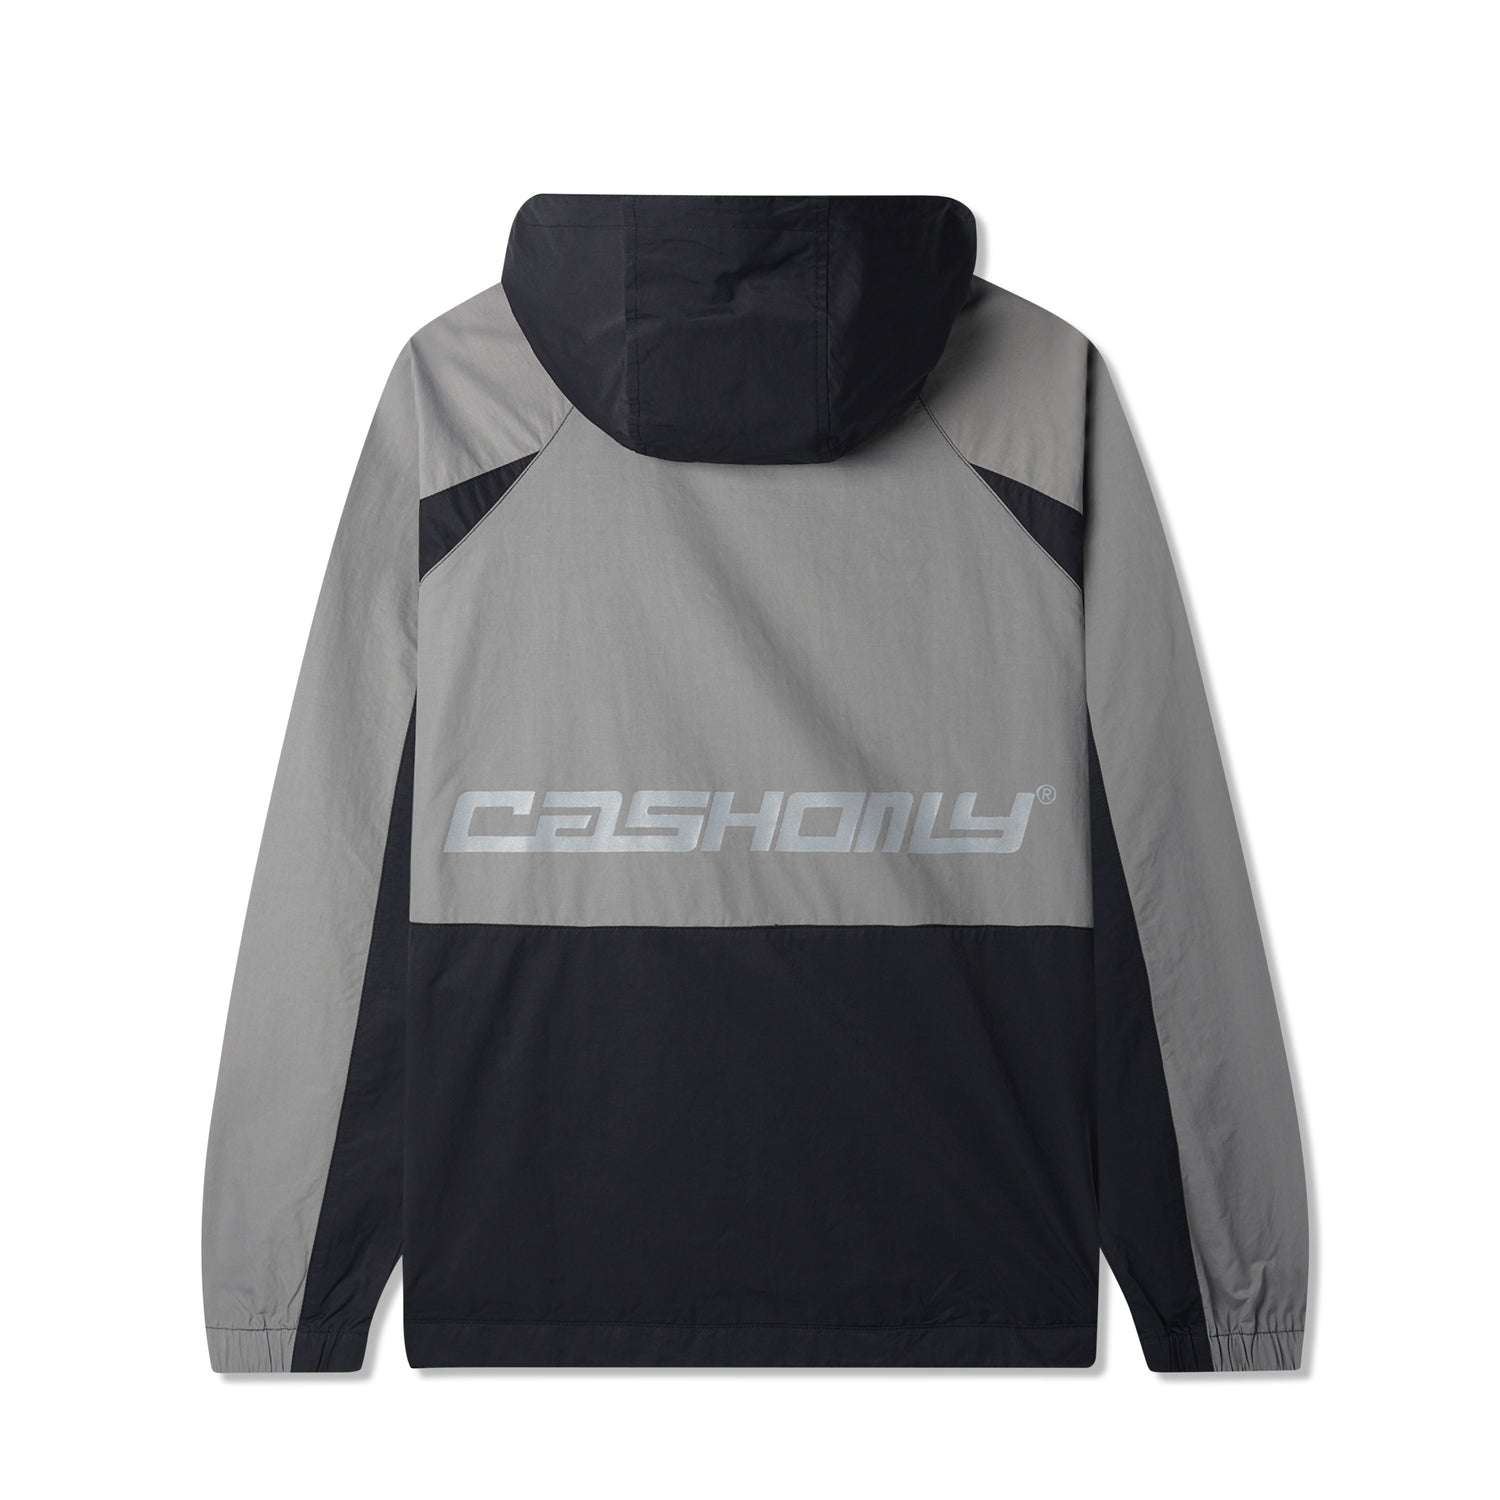 Athletic Anorak Jacket, Black / Grey